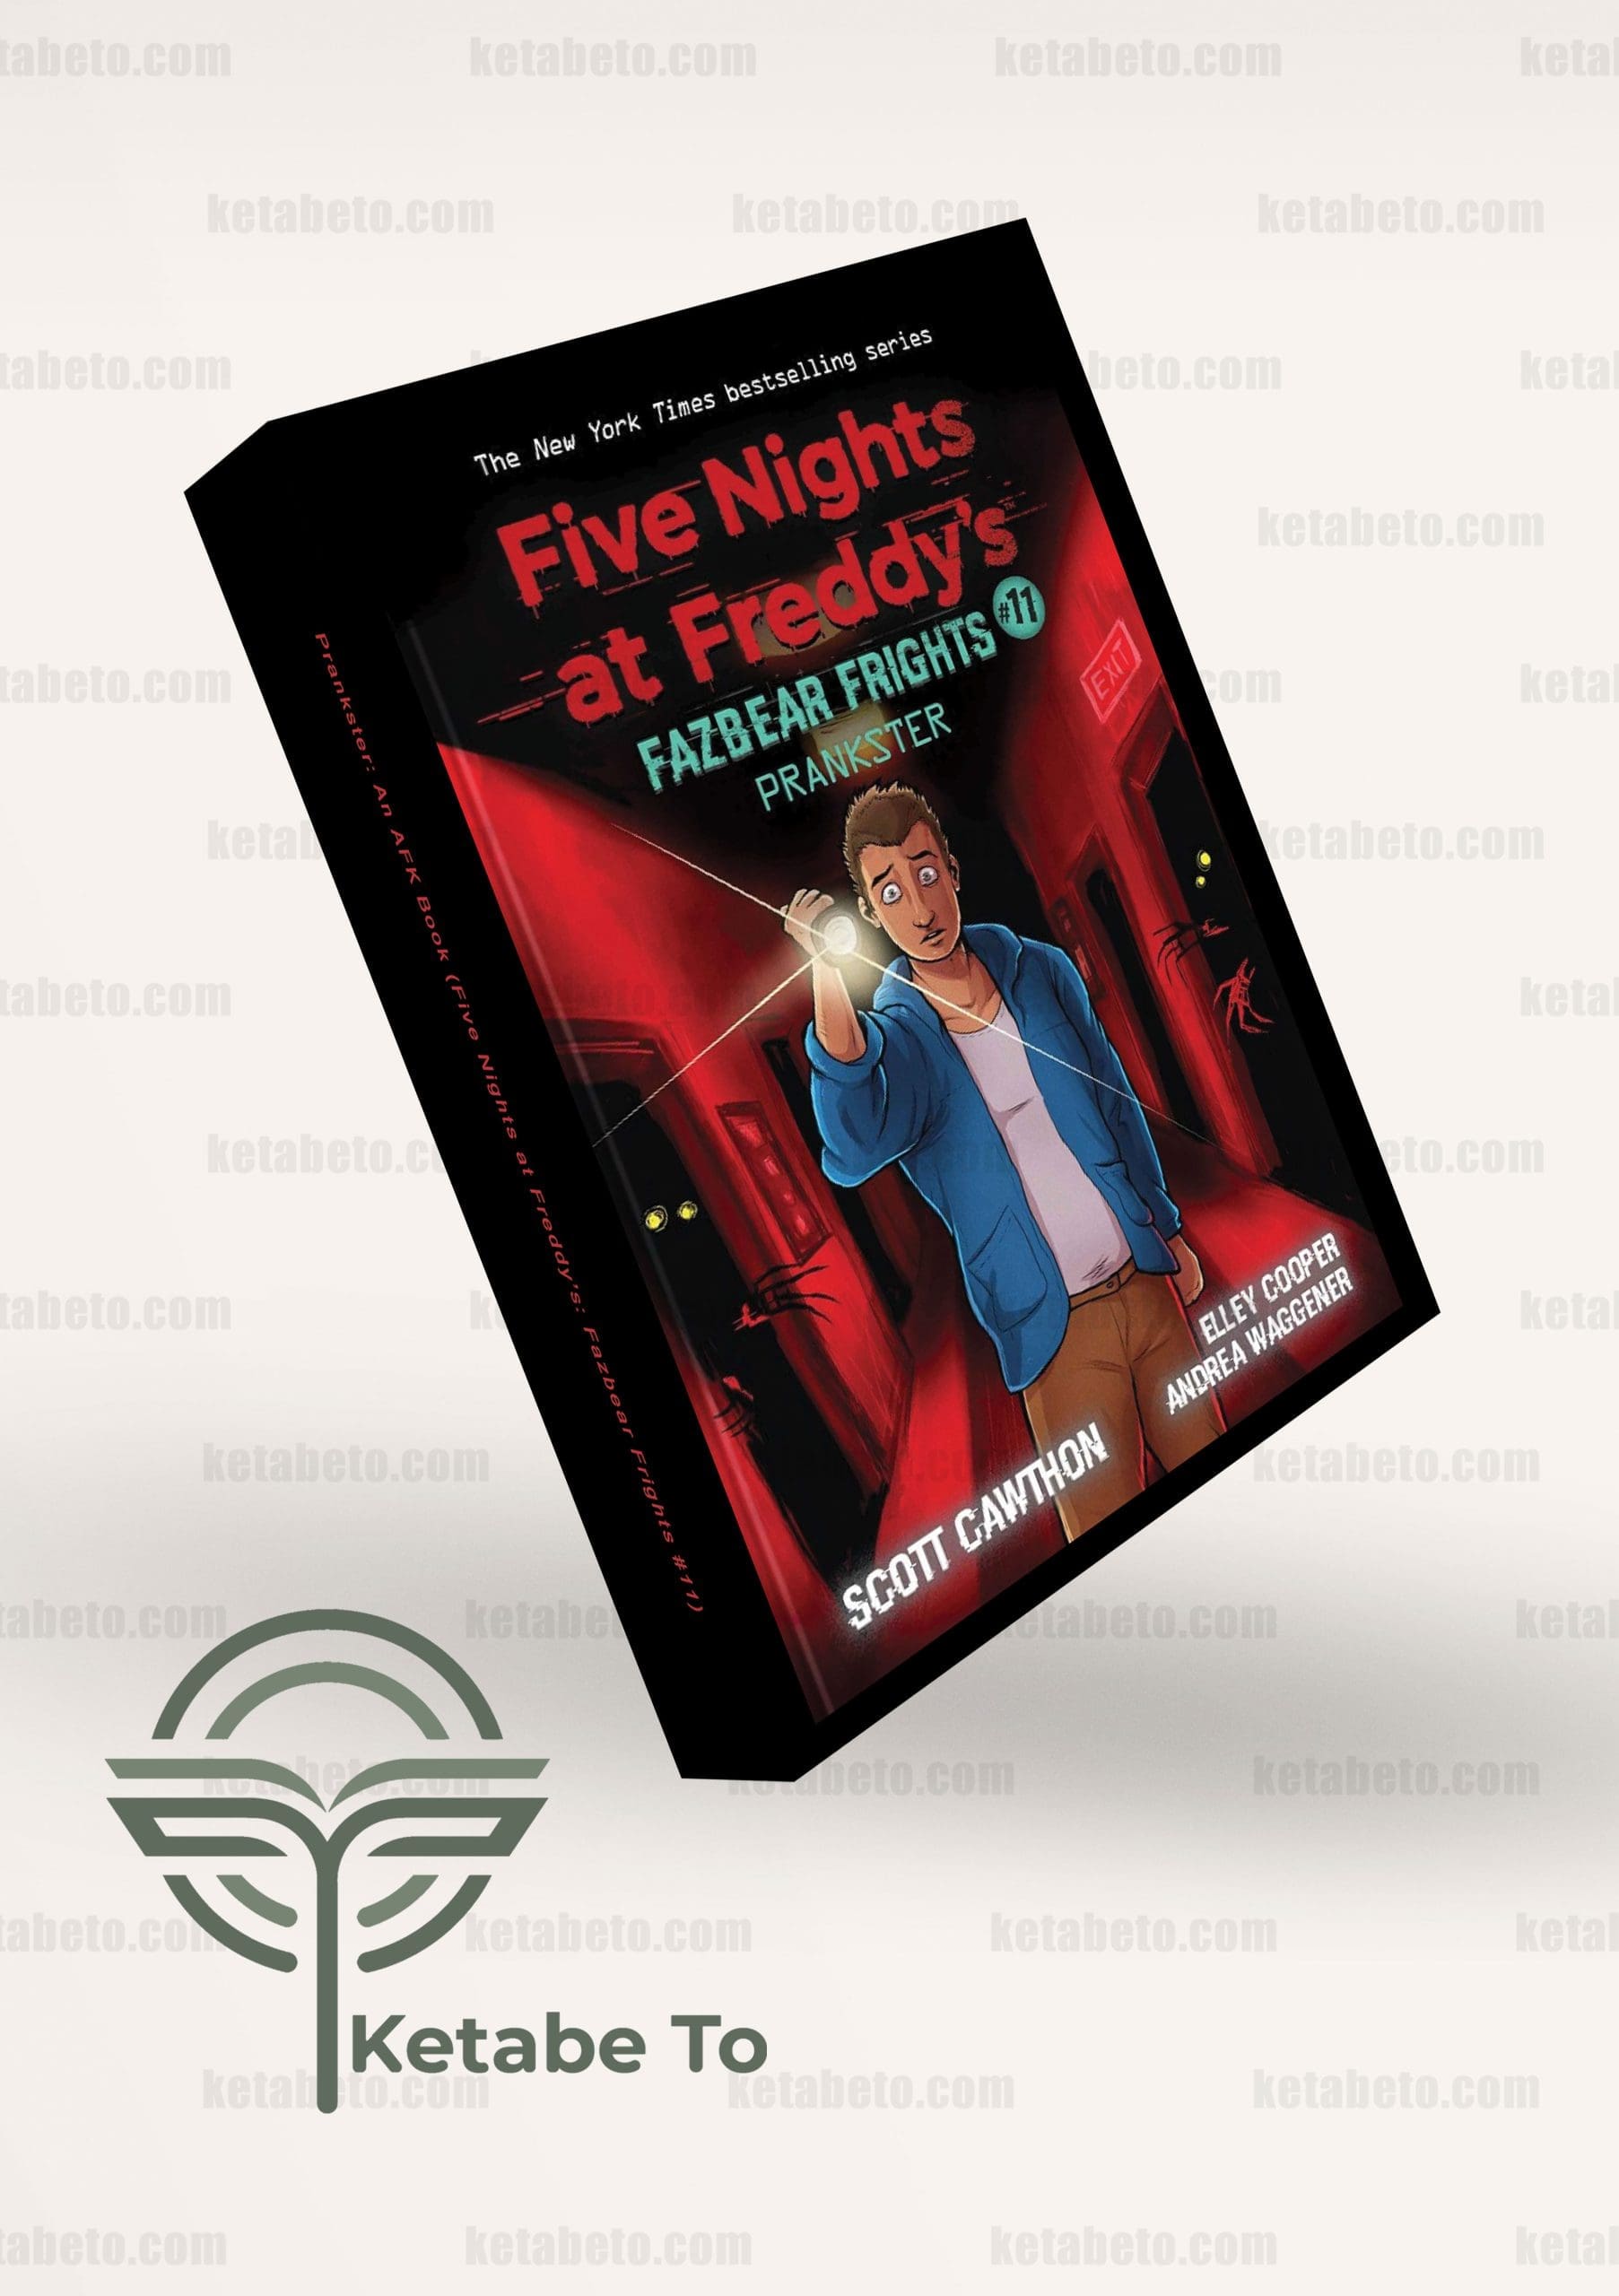 Prankster (Five Nights at Freddy's: Fazbear Frights #11) by Scott Cawthon